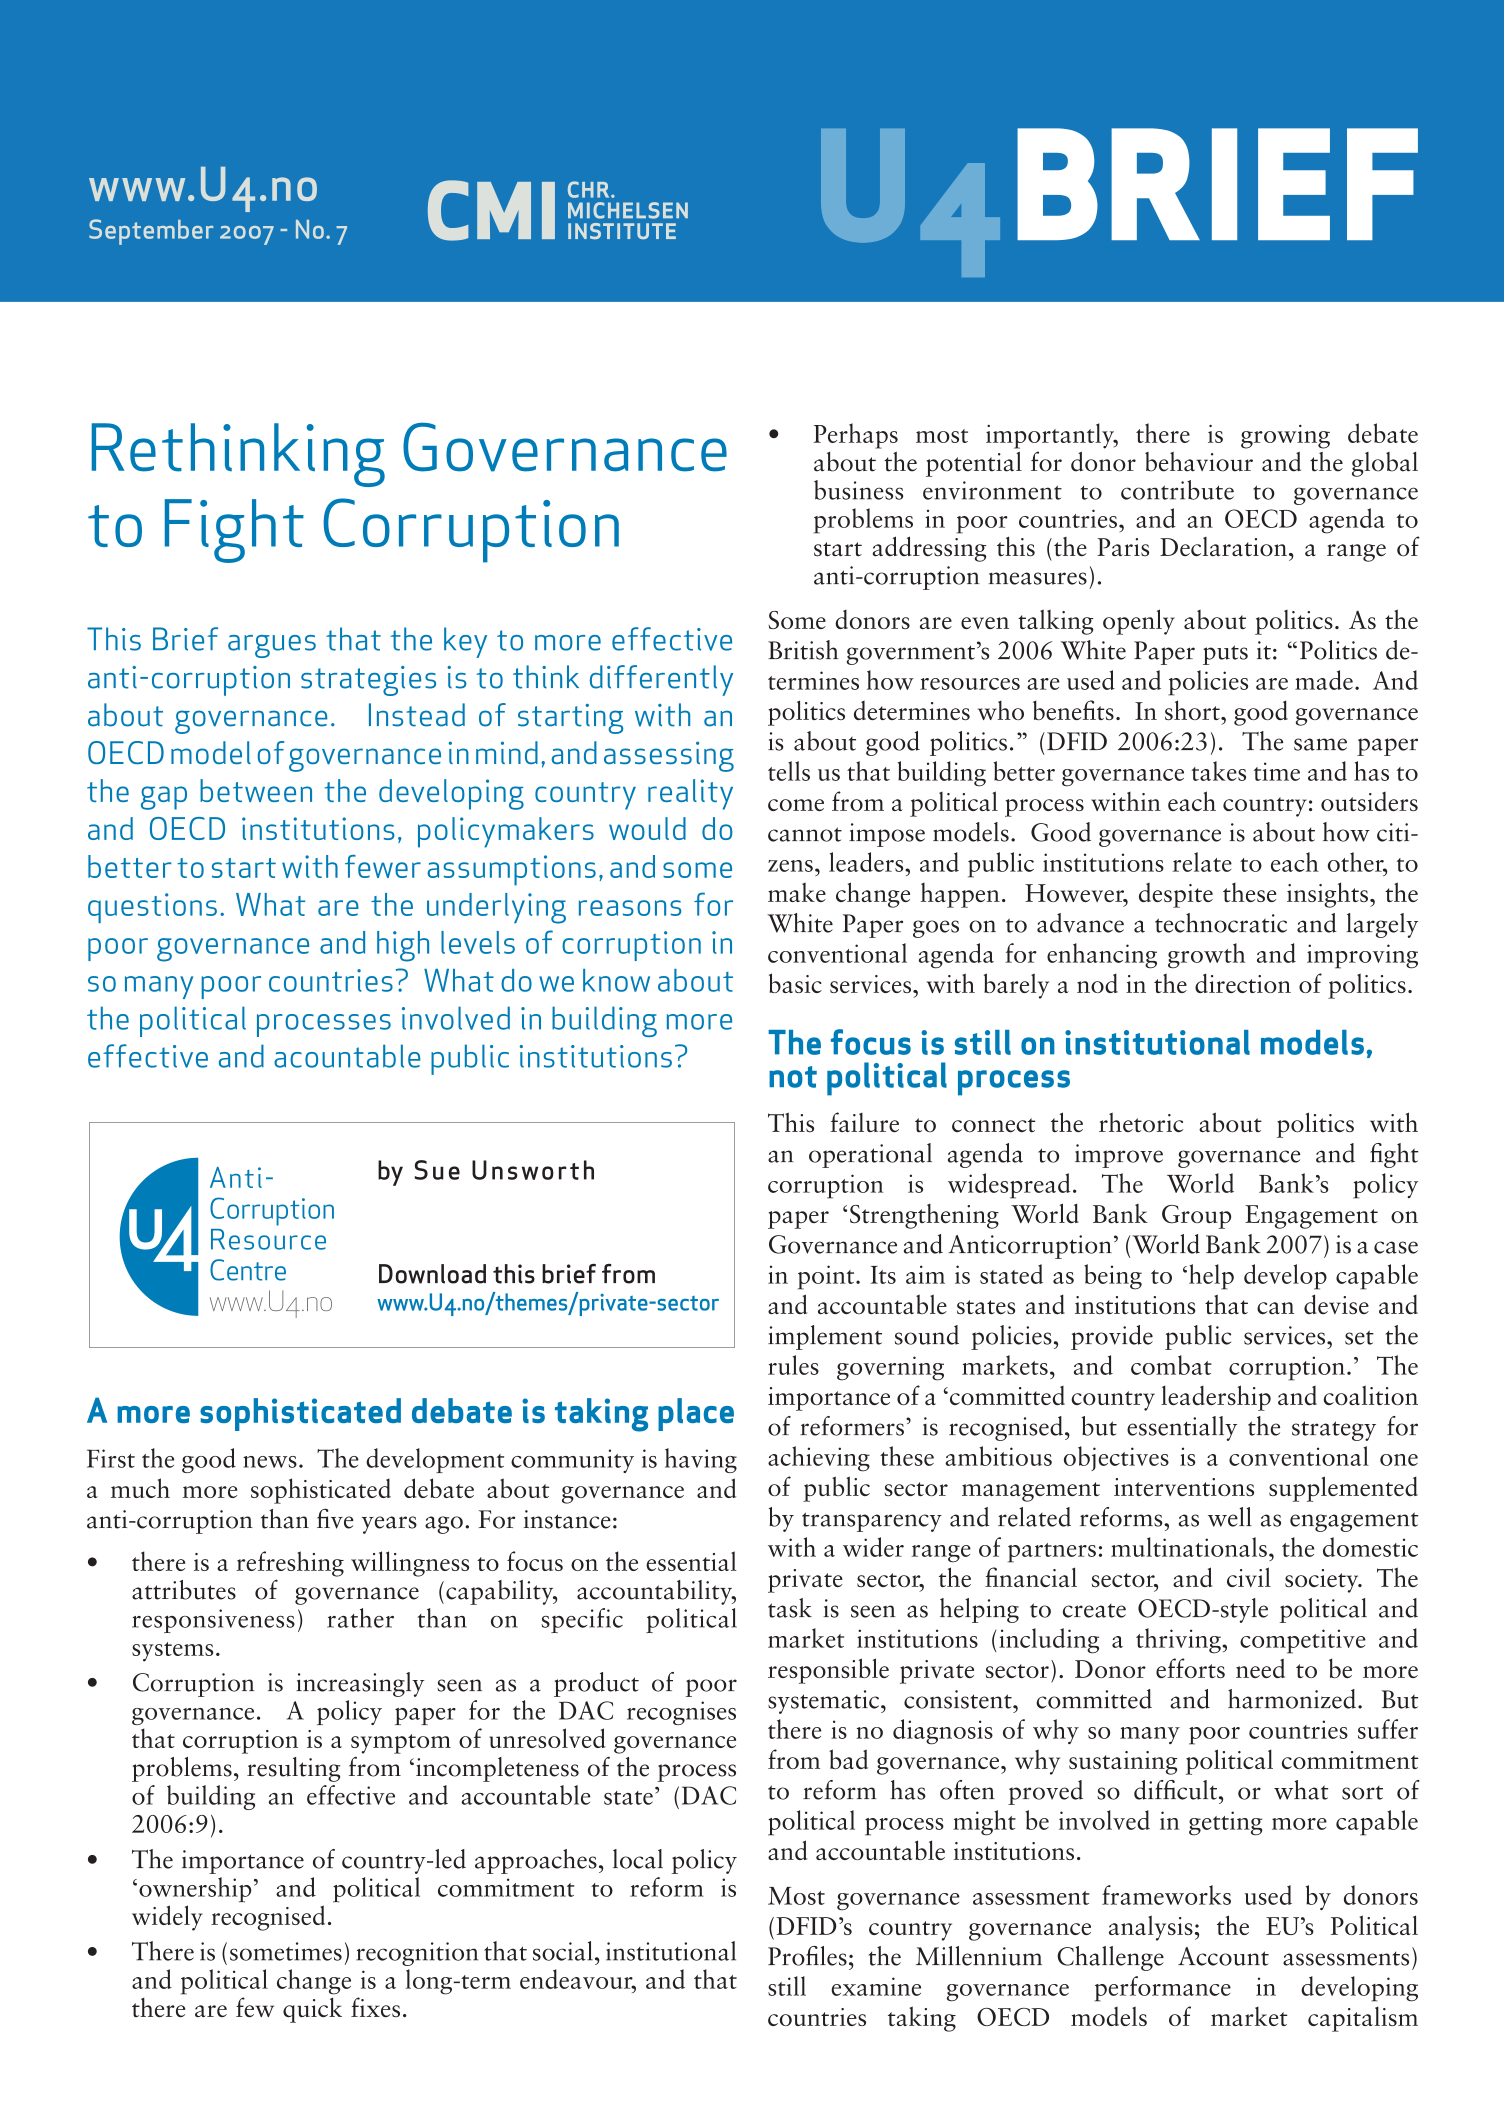 Rethinking governance to fight corruption